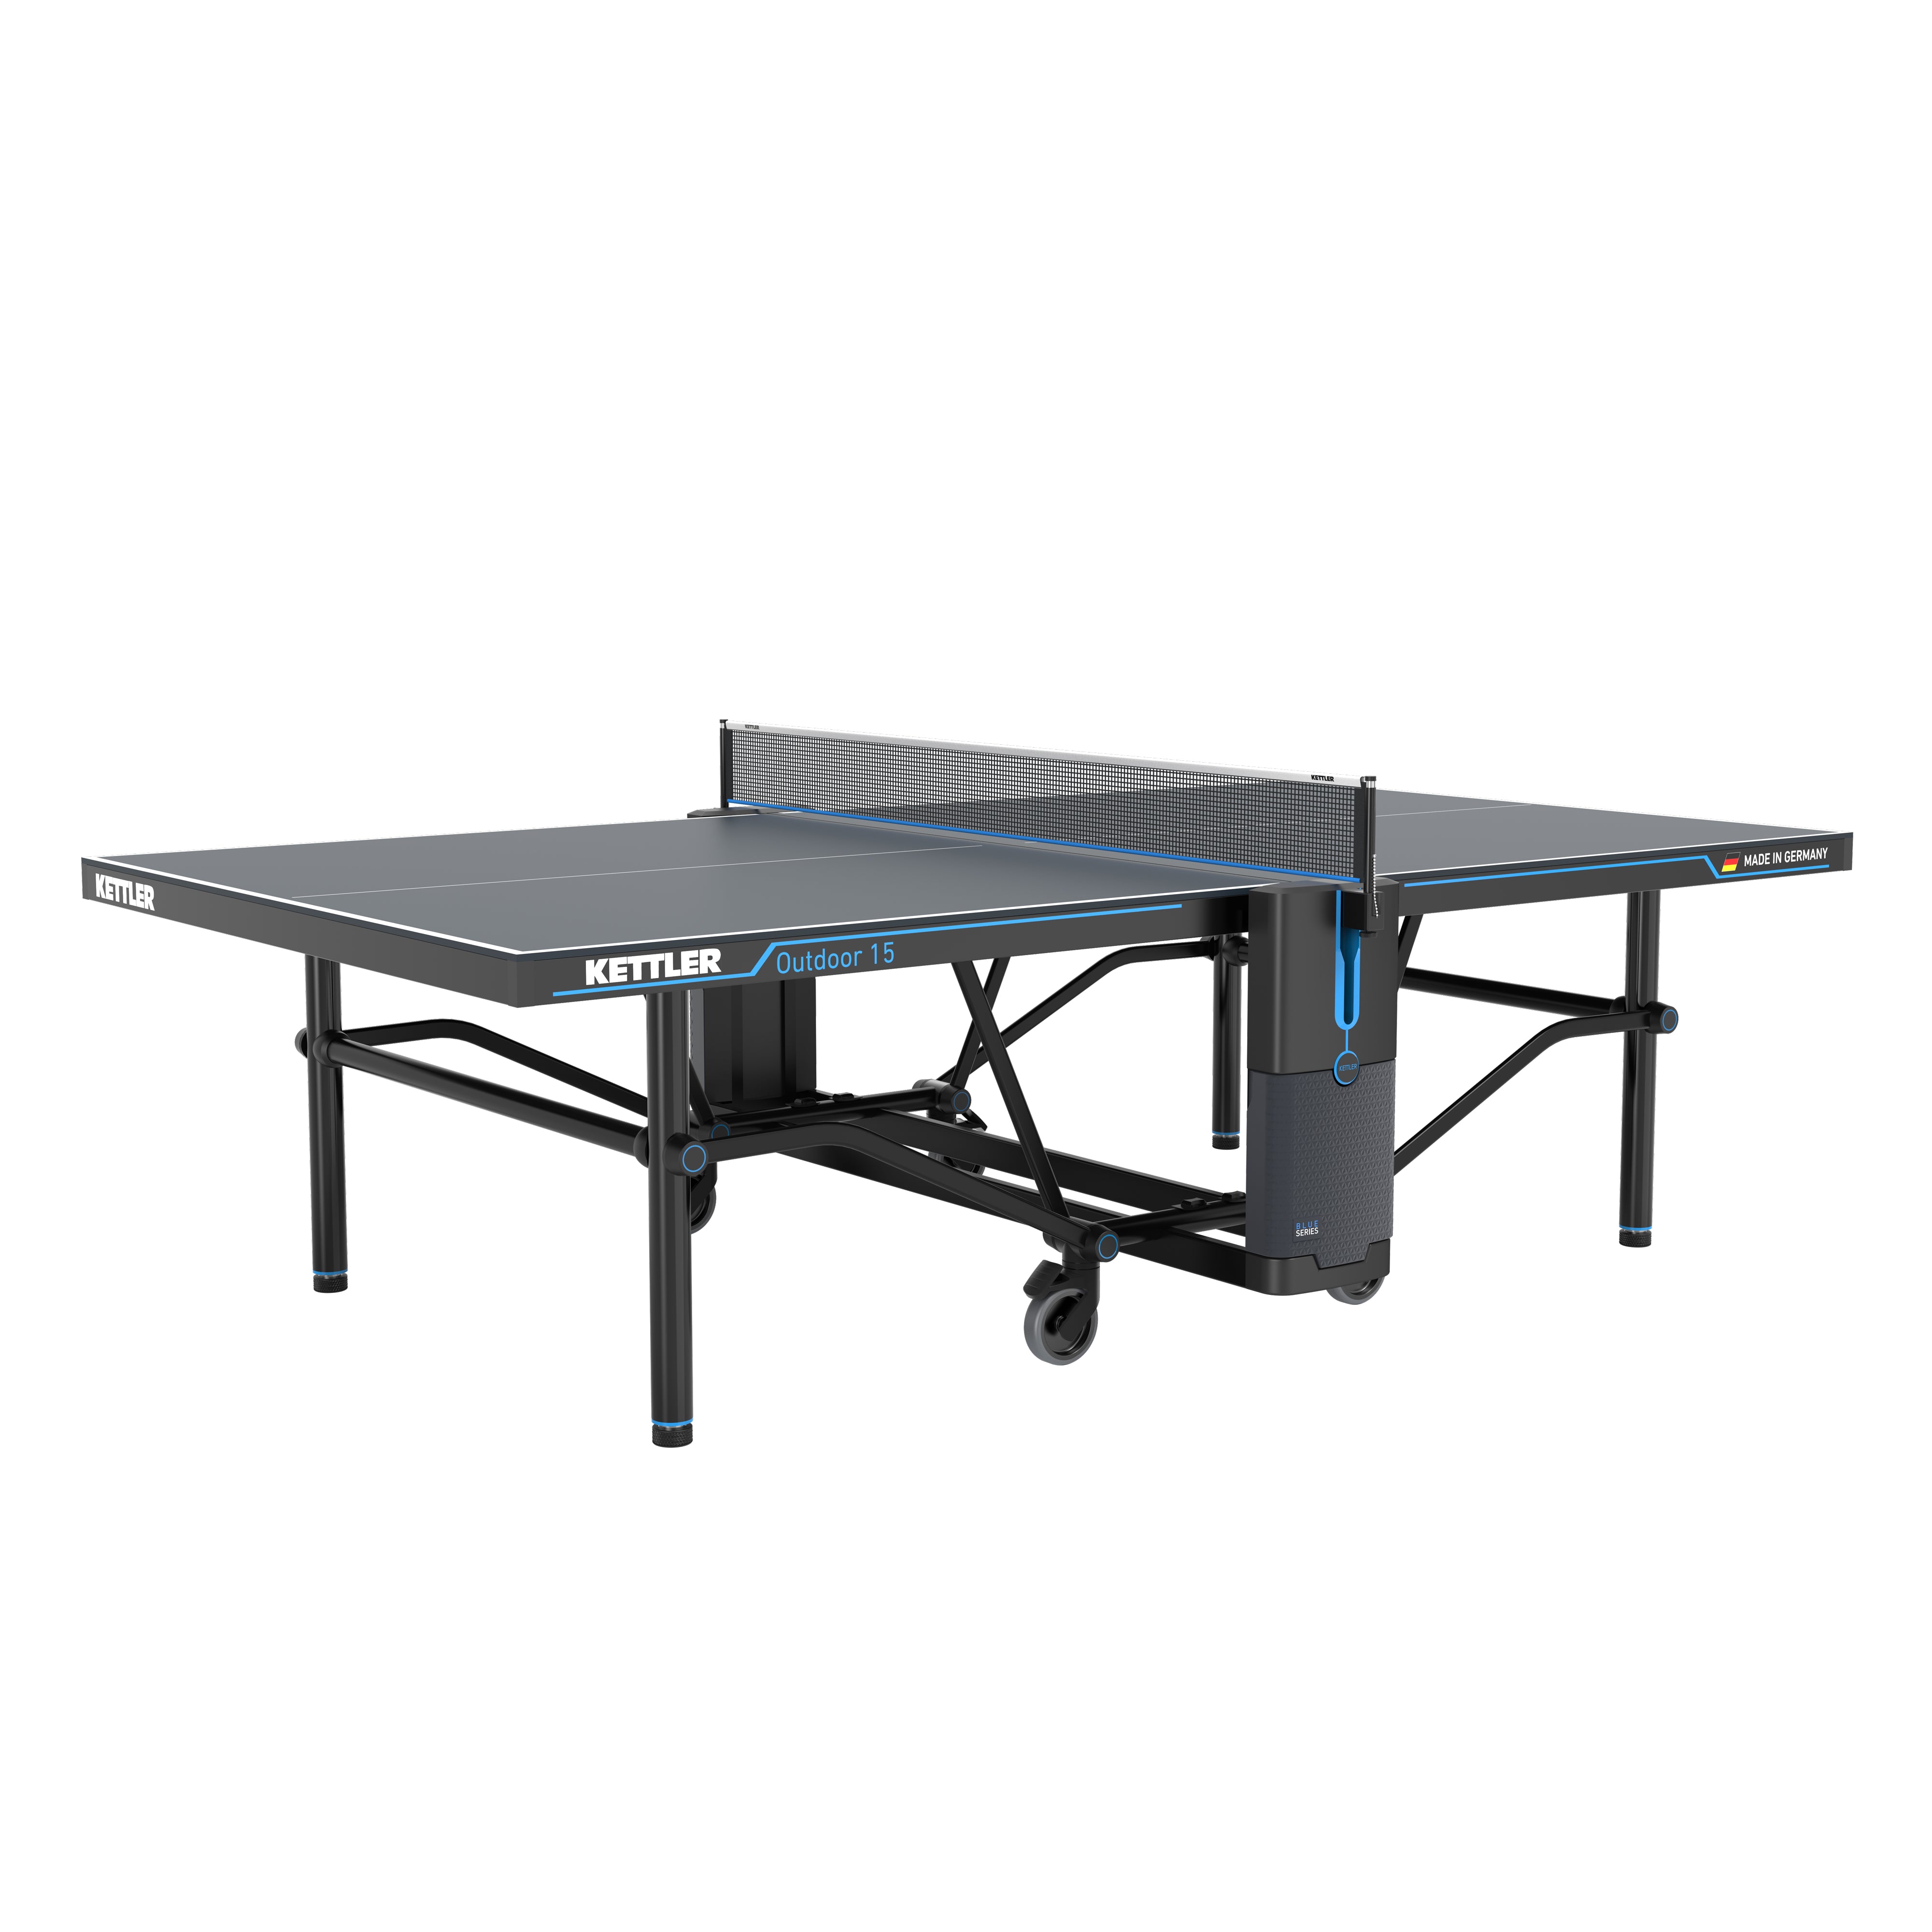 Fæstning Terminal Skråstreg Outdoor 15 Table Tennis Table – KETTLER USA